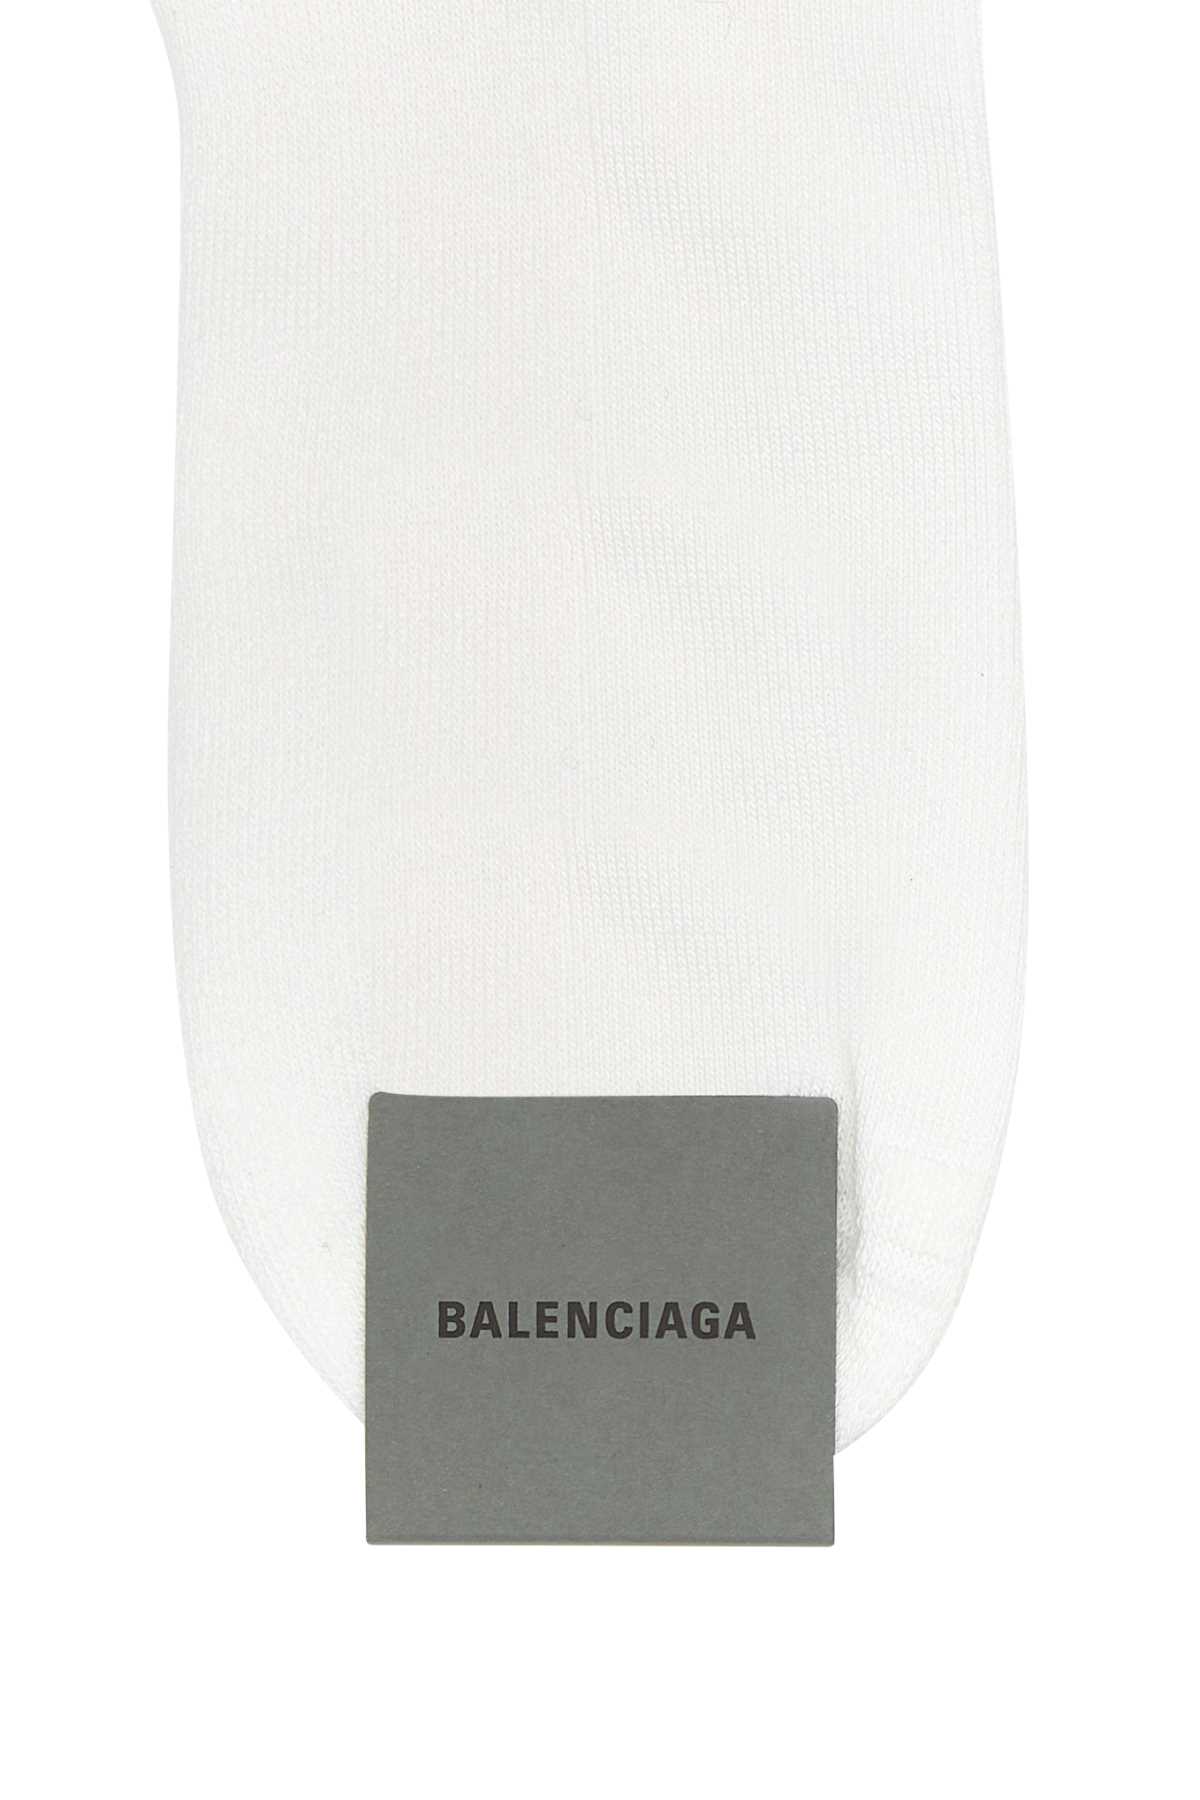 Balenciaga White Stretch Cotton Blend Socks In Whiteblack